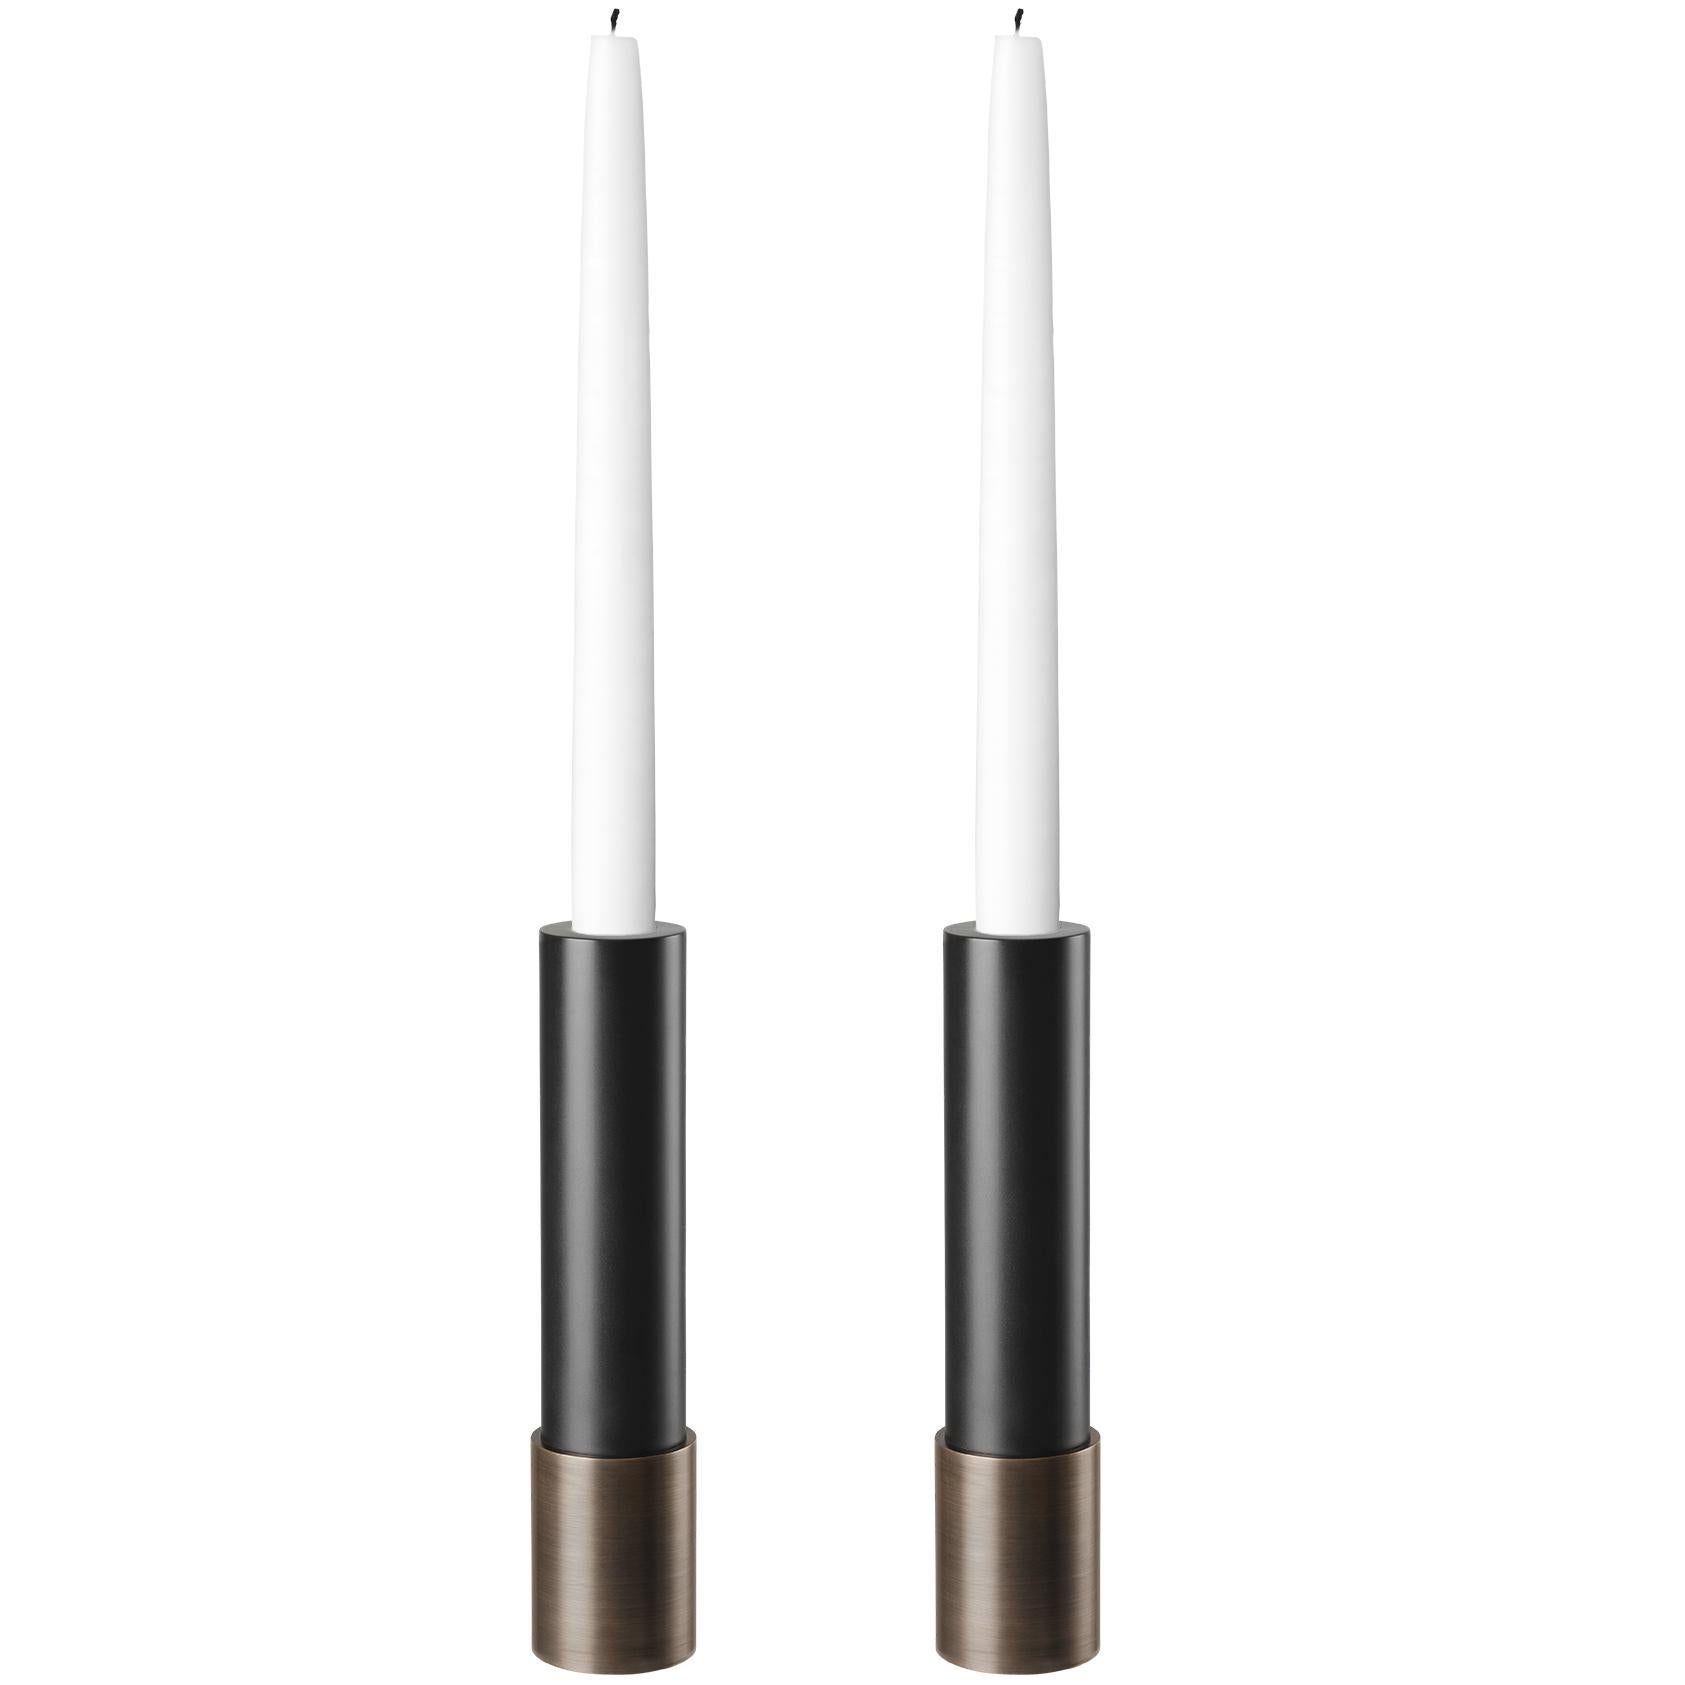 Pair of Candlesticks Model #17 by Space Copenhagen for Gubi For Sale 10